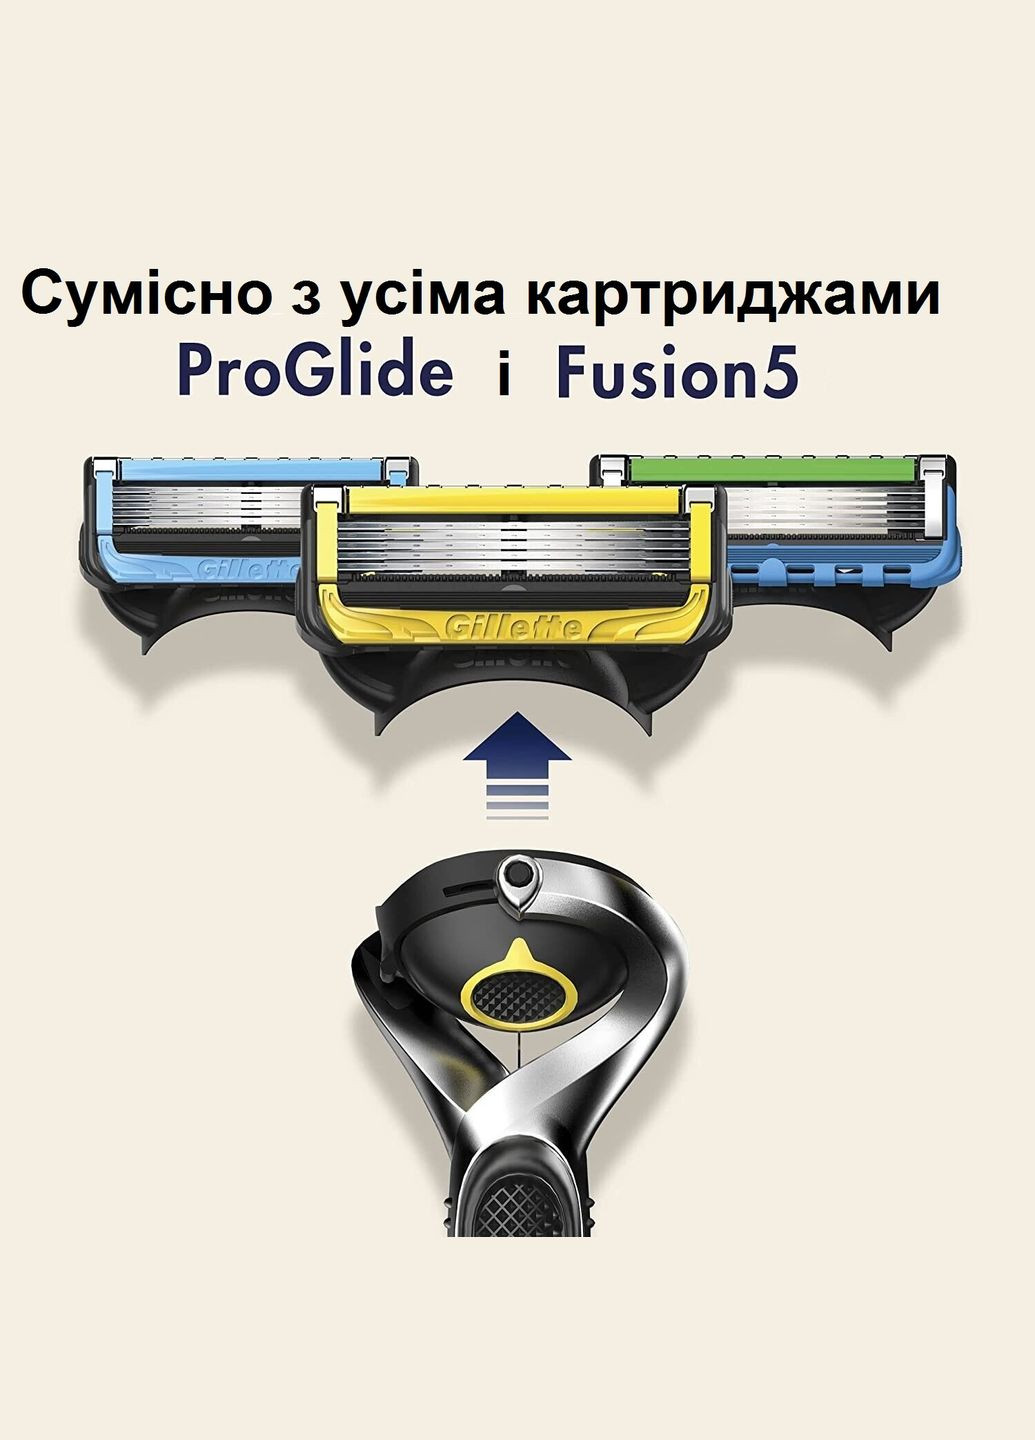 Станок для бритья ProGlide Shield Made in America 1 станок и 2 картриджа Gillette (278773593)